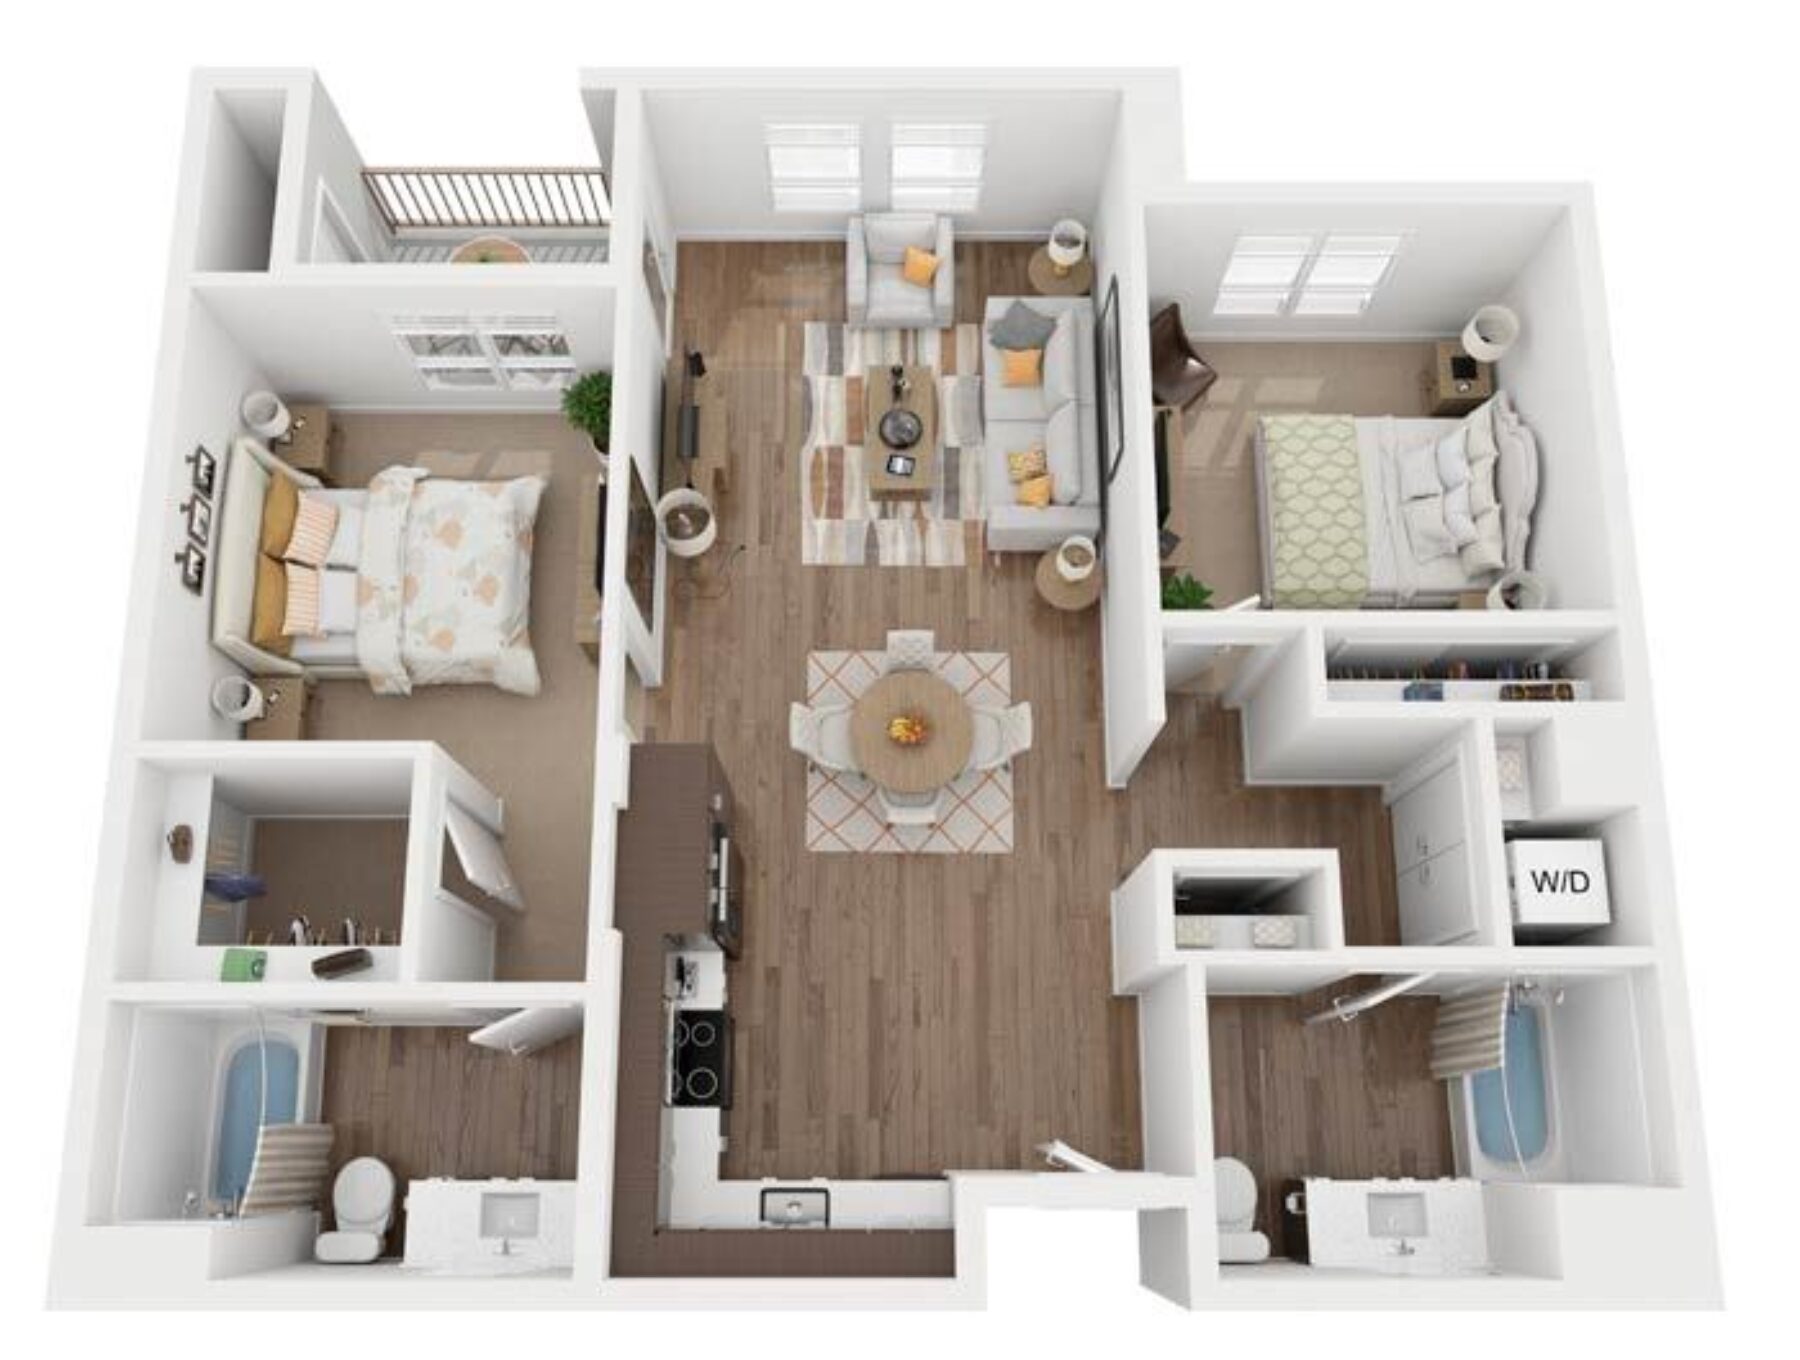 Plan Image: B1 - Two Bedroom